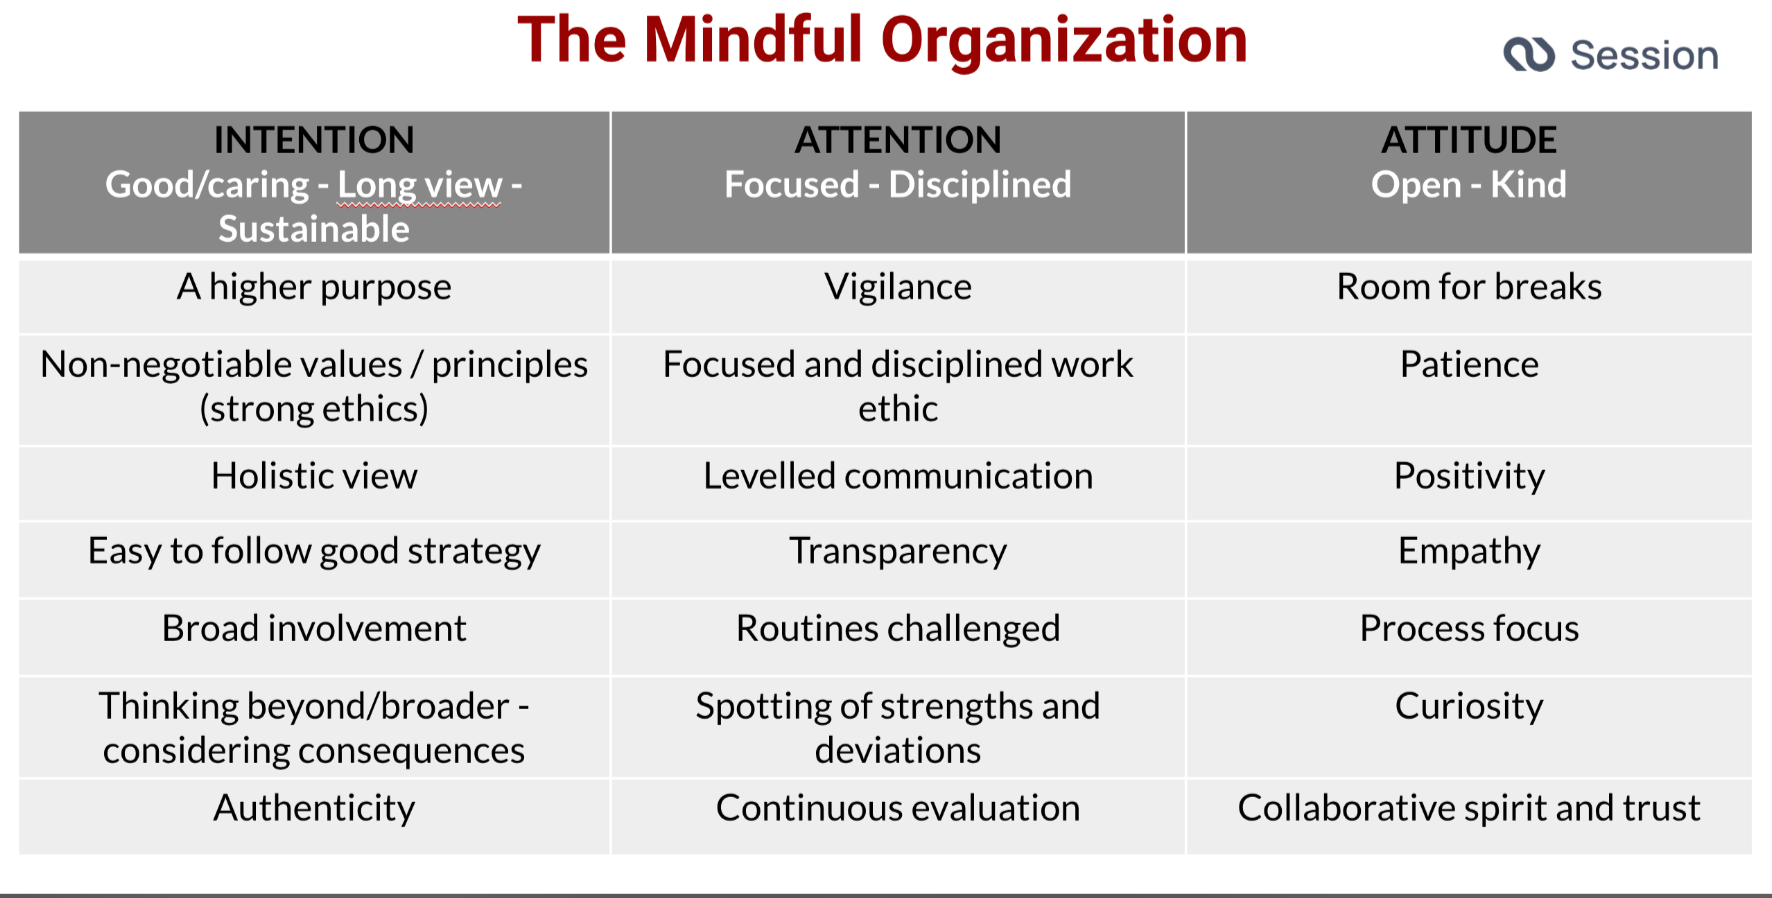 The mindful organization